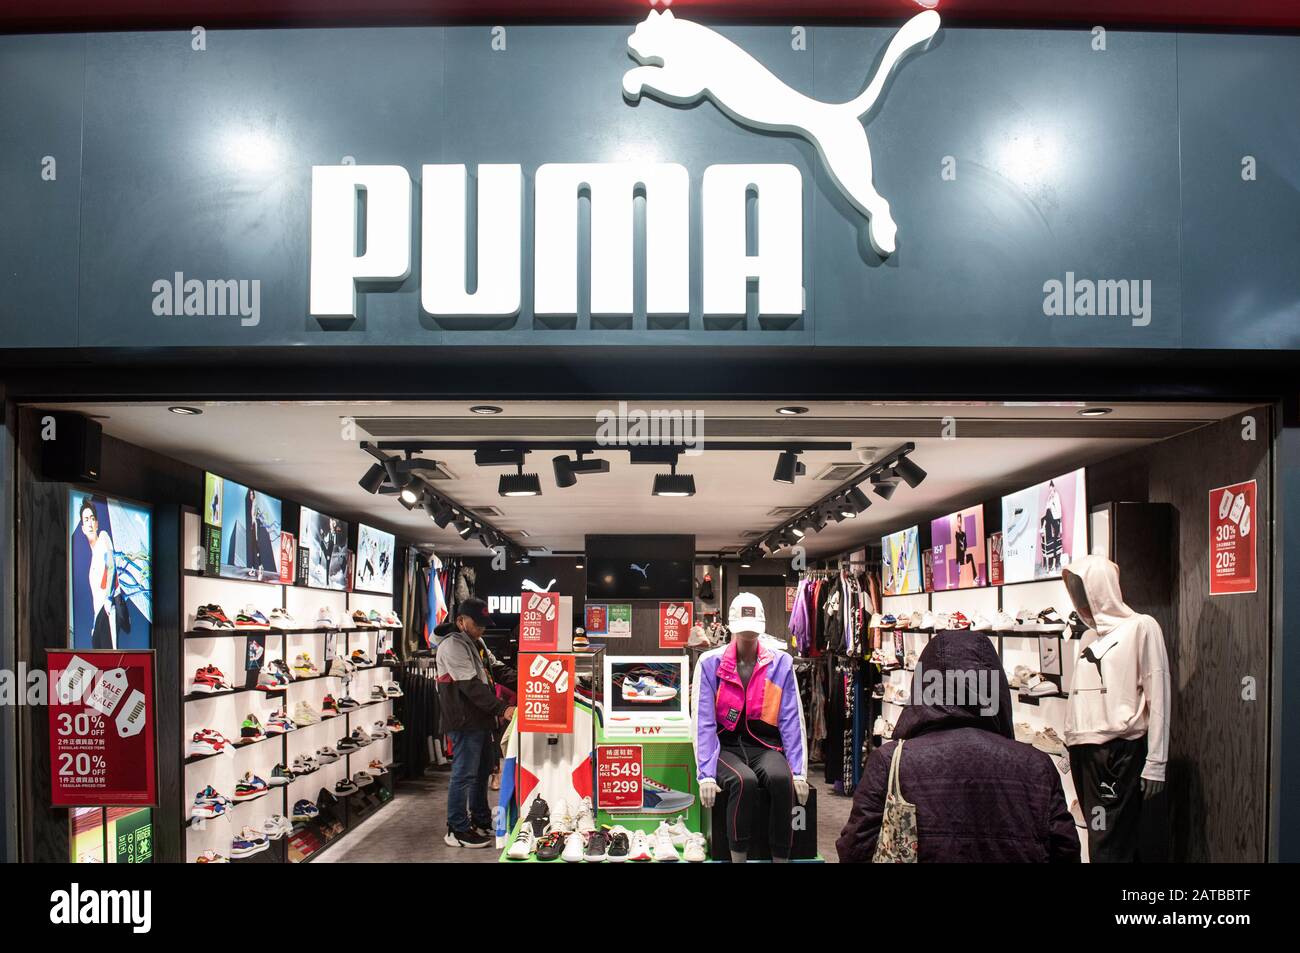 puma showroom